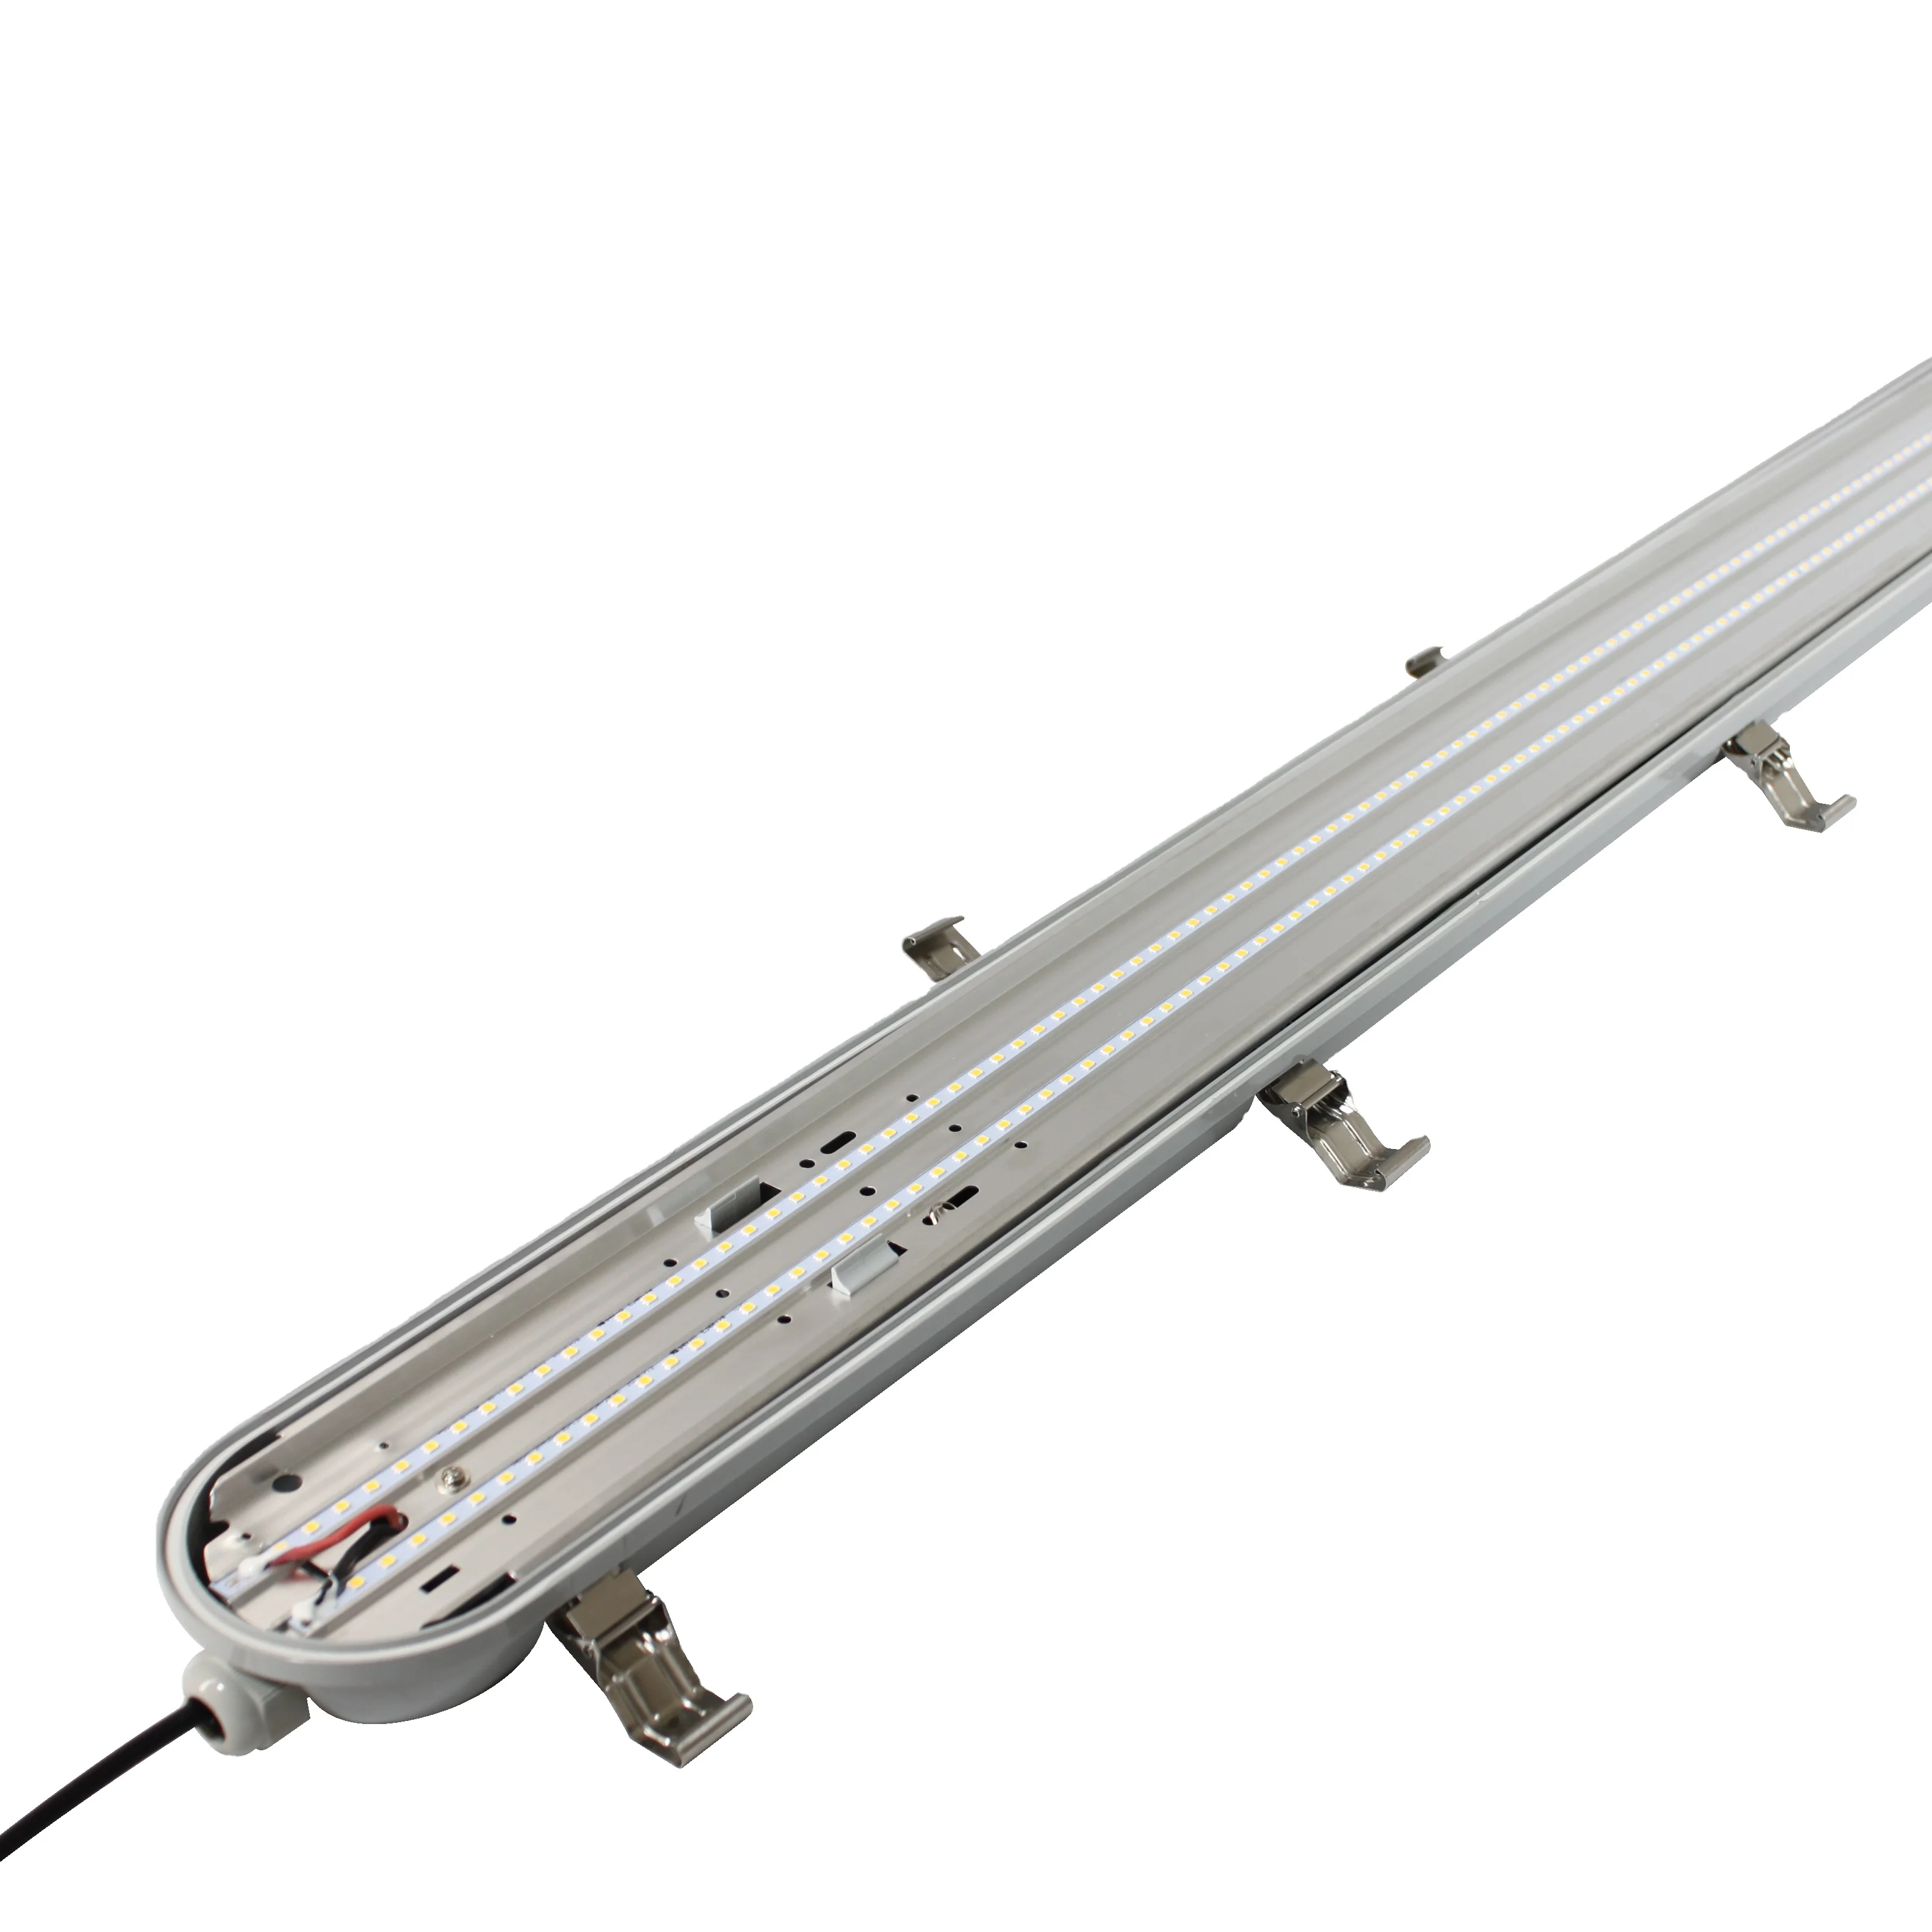 ShineLong hot sales IP65 tri proof light 120lm/w saa weatherproof batten light